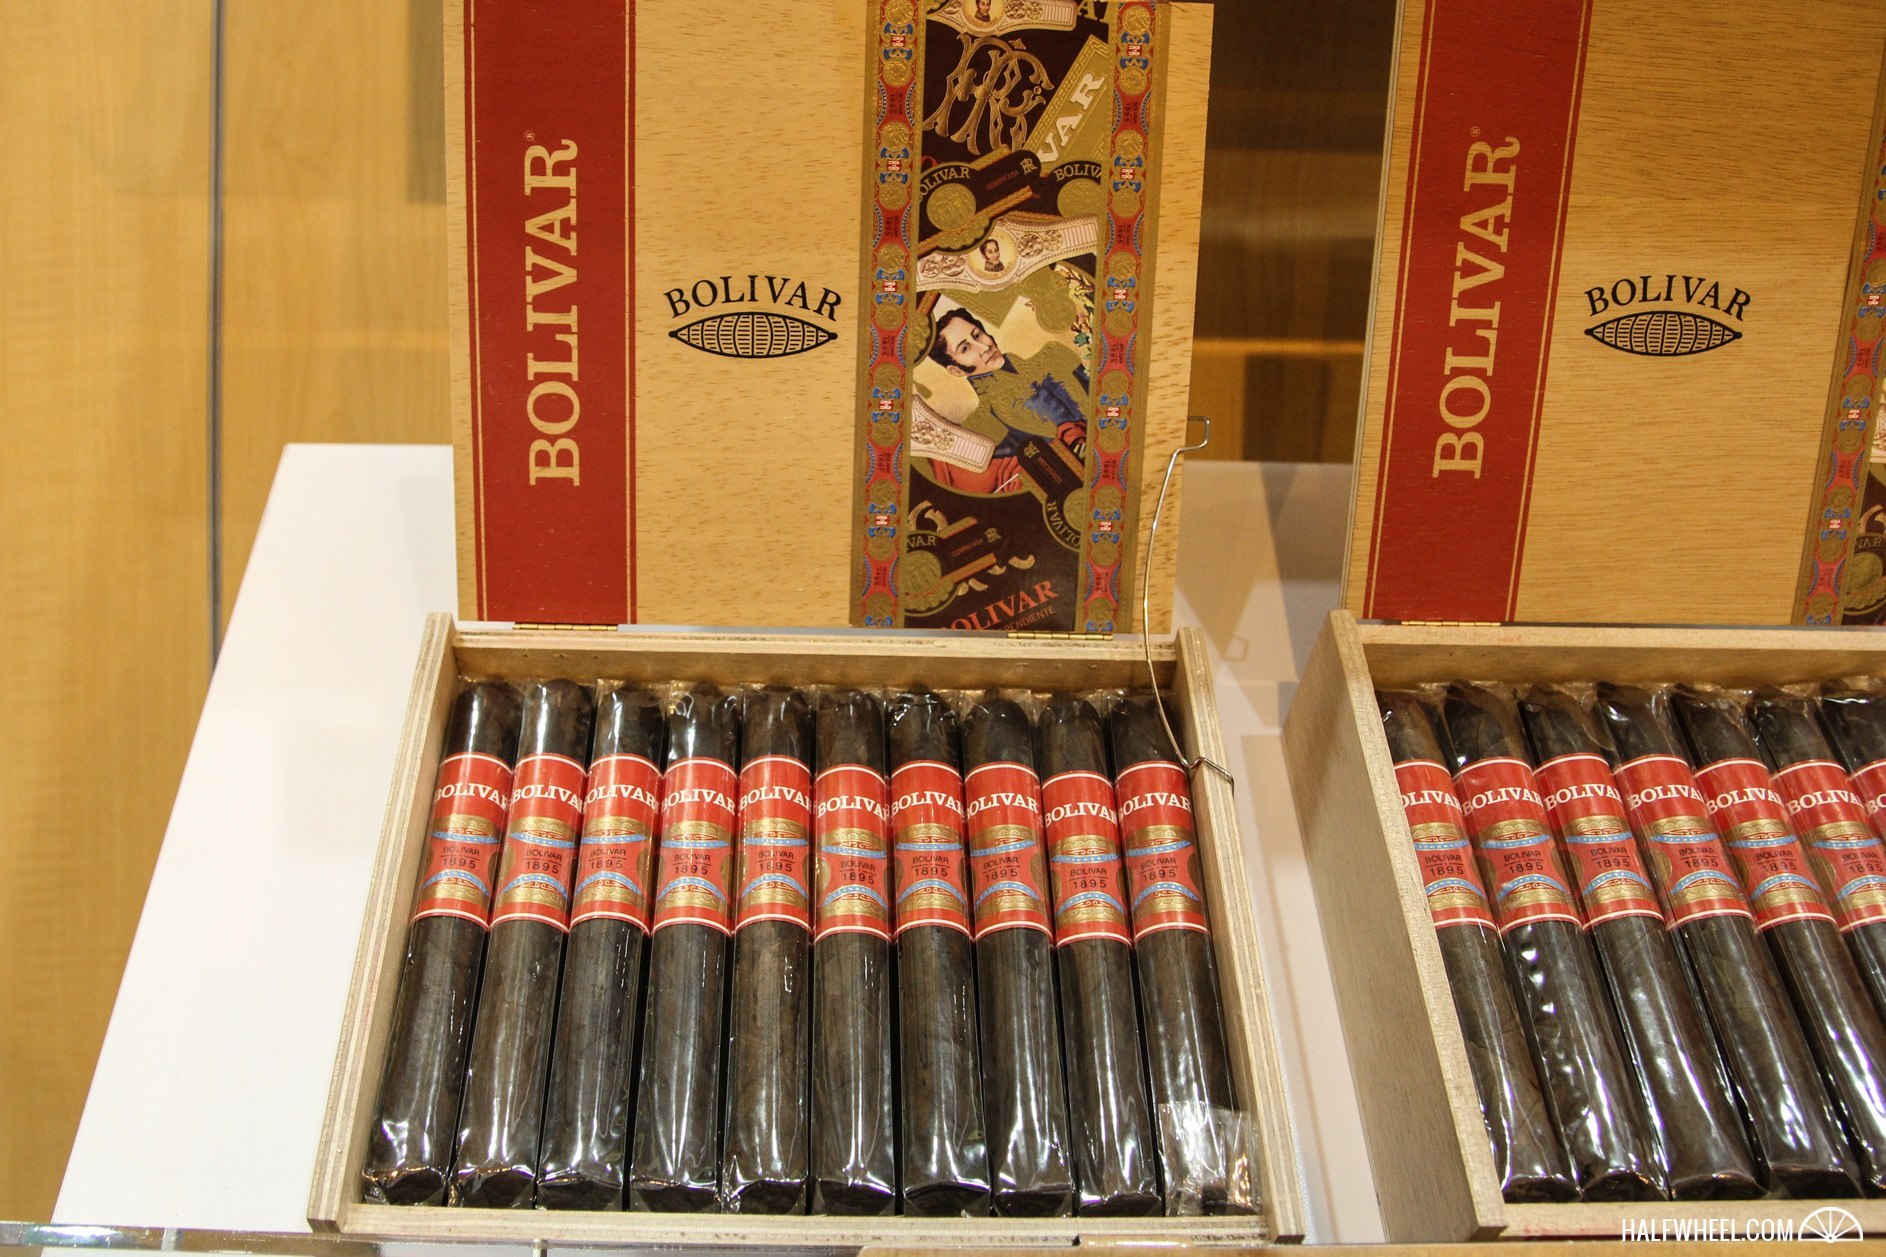 General Cigar Co Bolivar rebrand